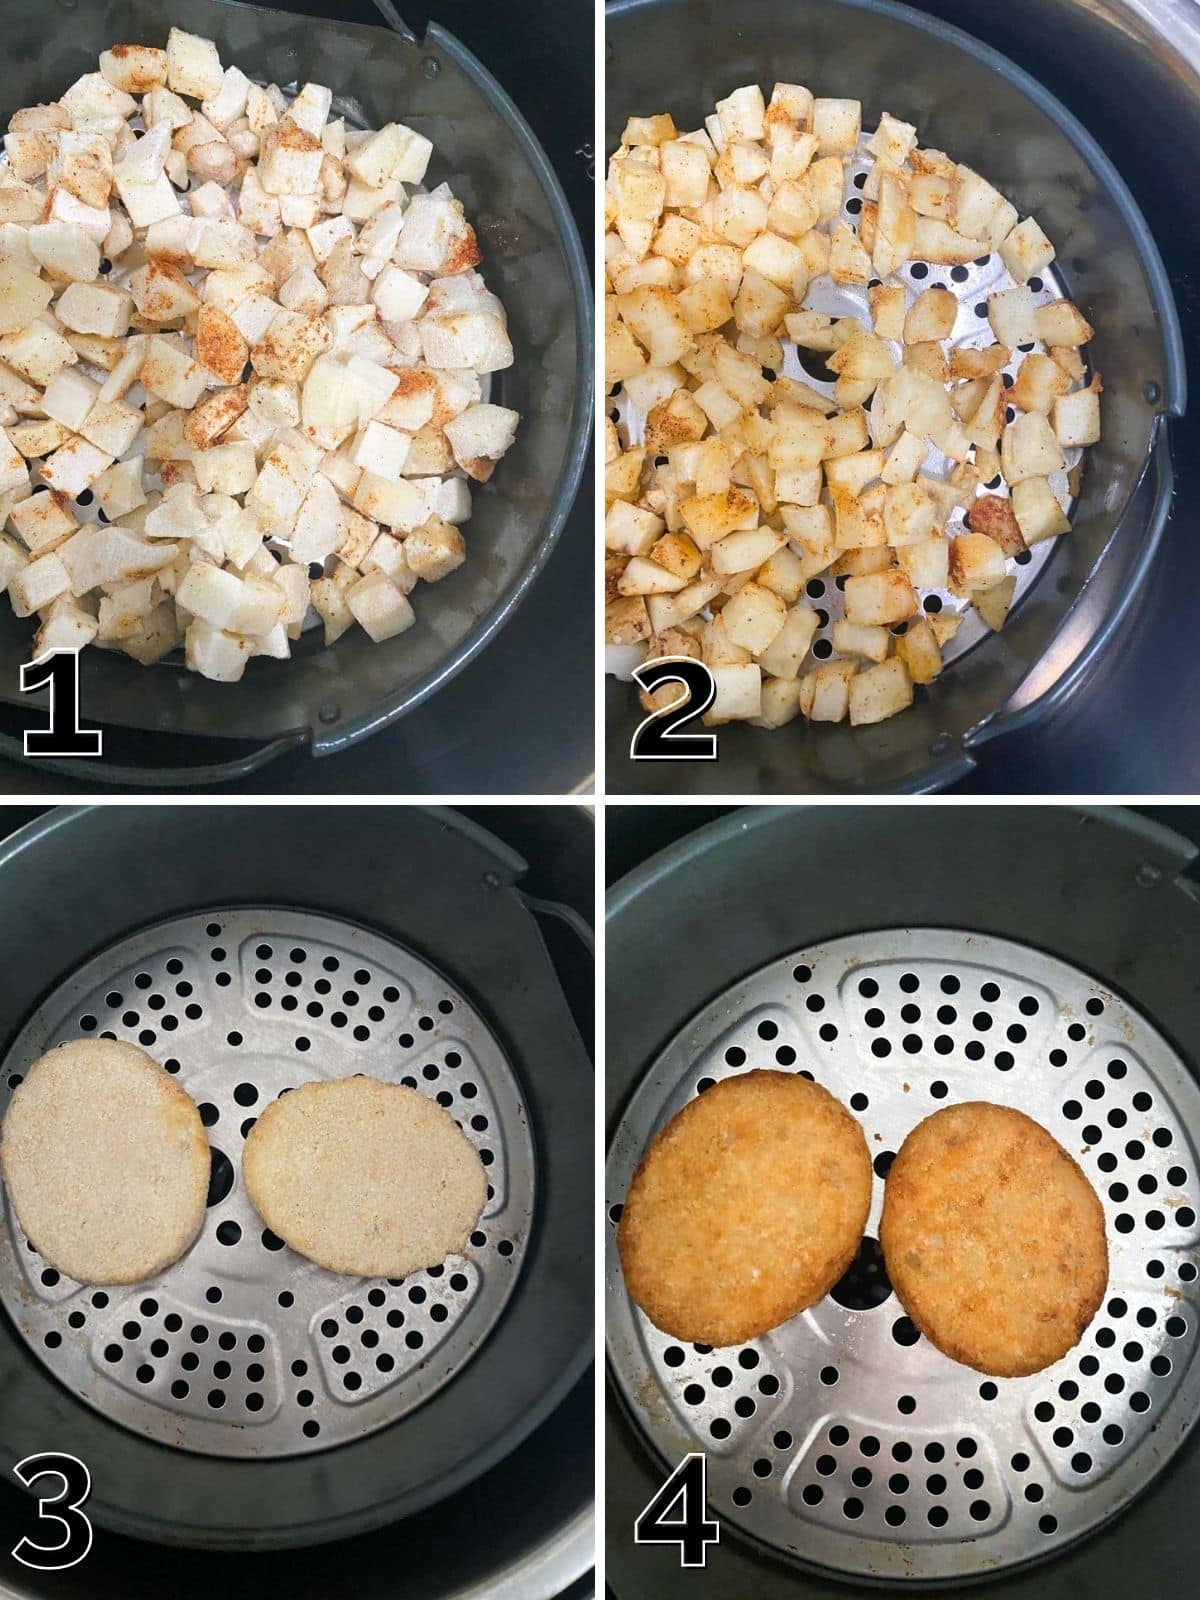 Frozen diced potatoes in the air fryer basket.